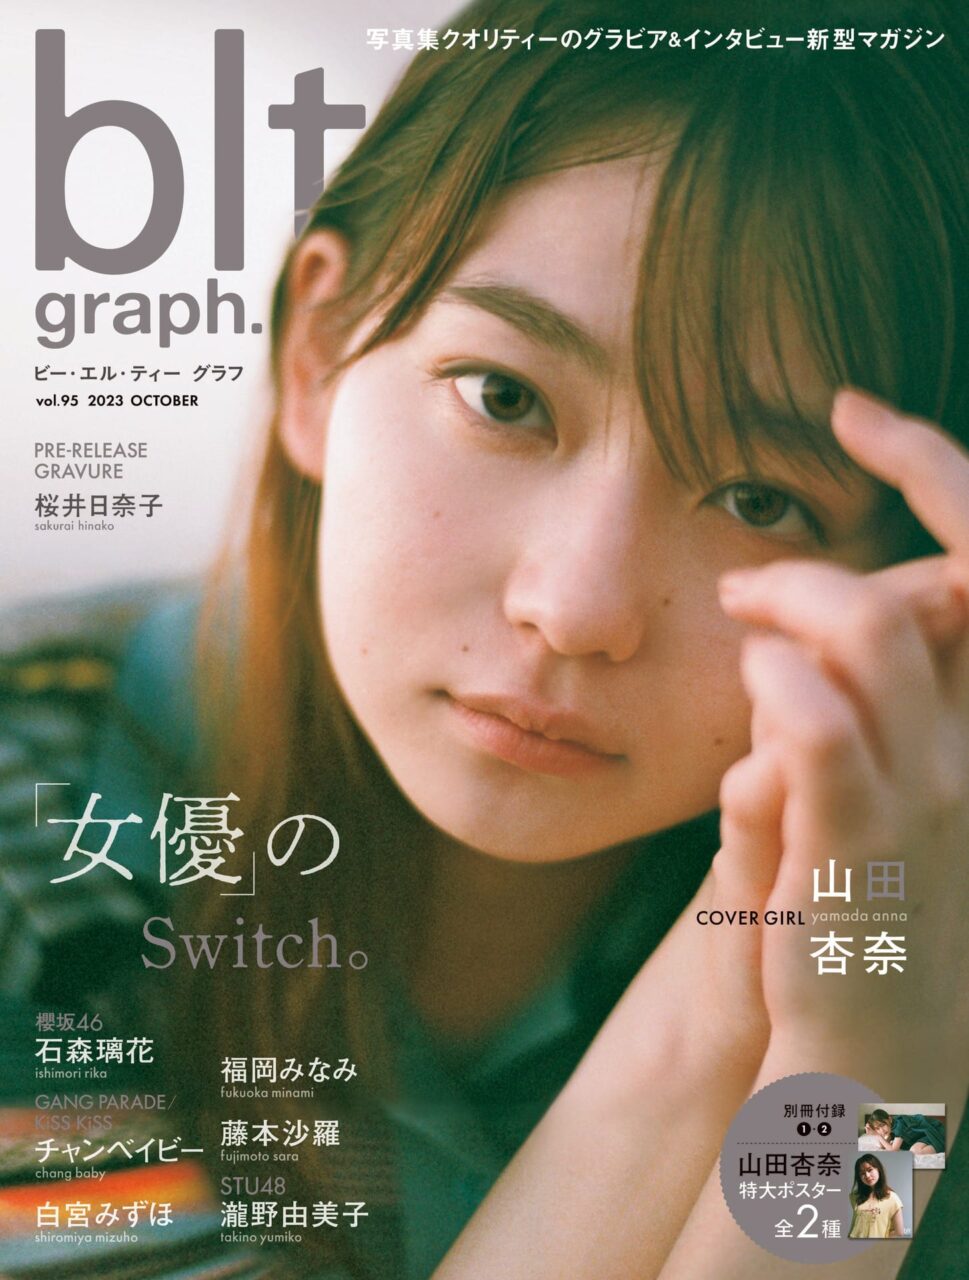 STU48 瀧野由美子、卒業直前ラストグラビア！「blt graph. vol.95」本日10/18発売！